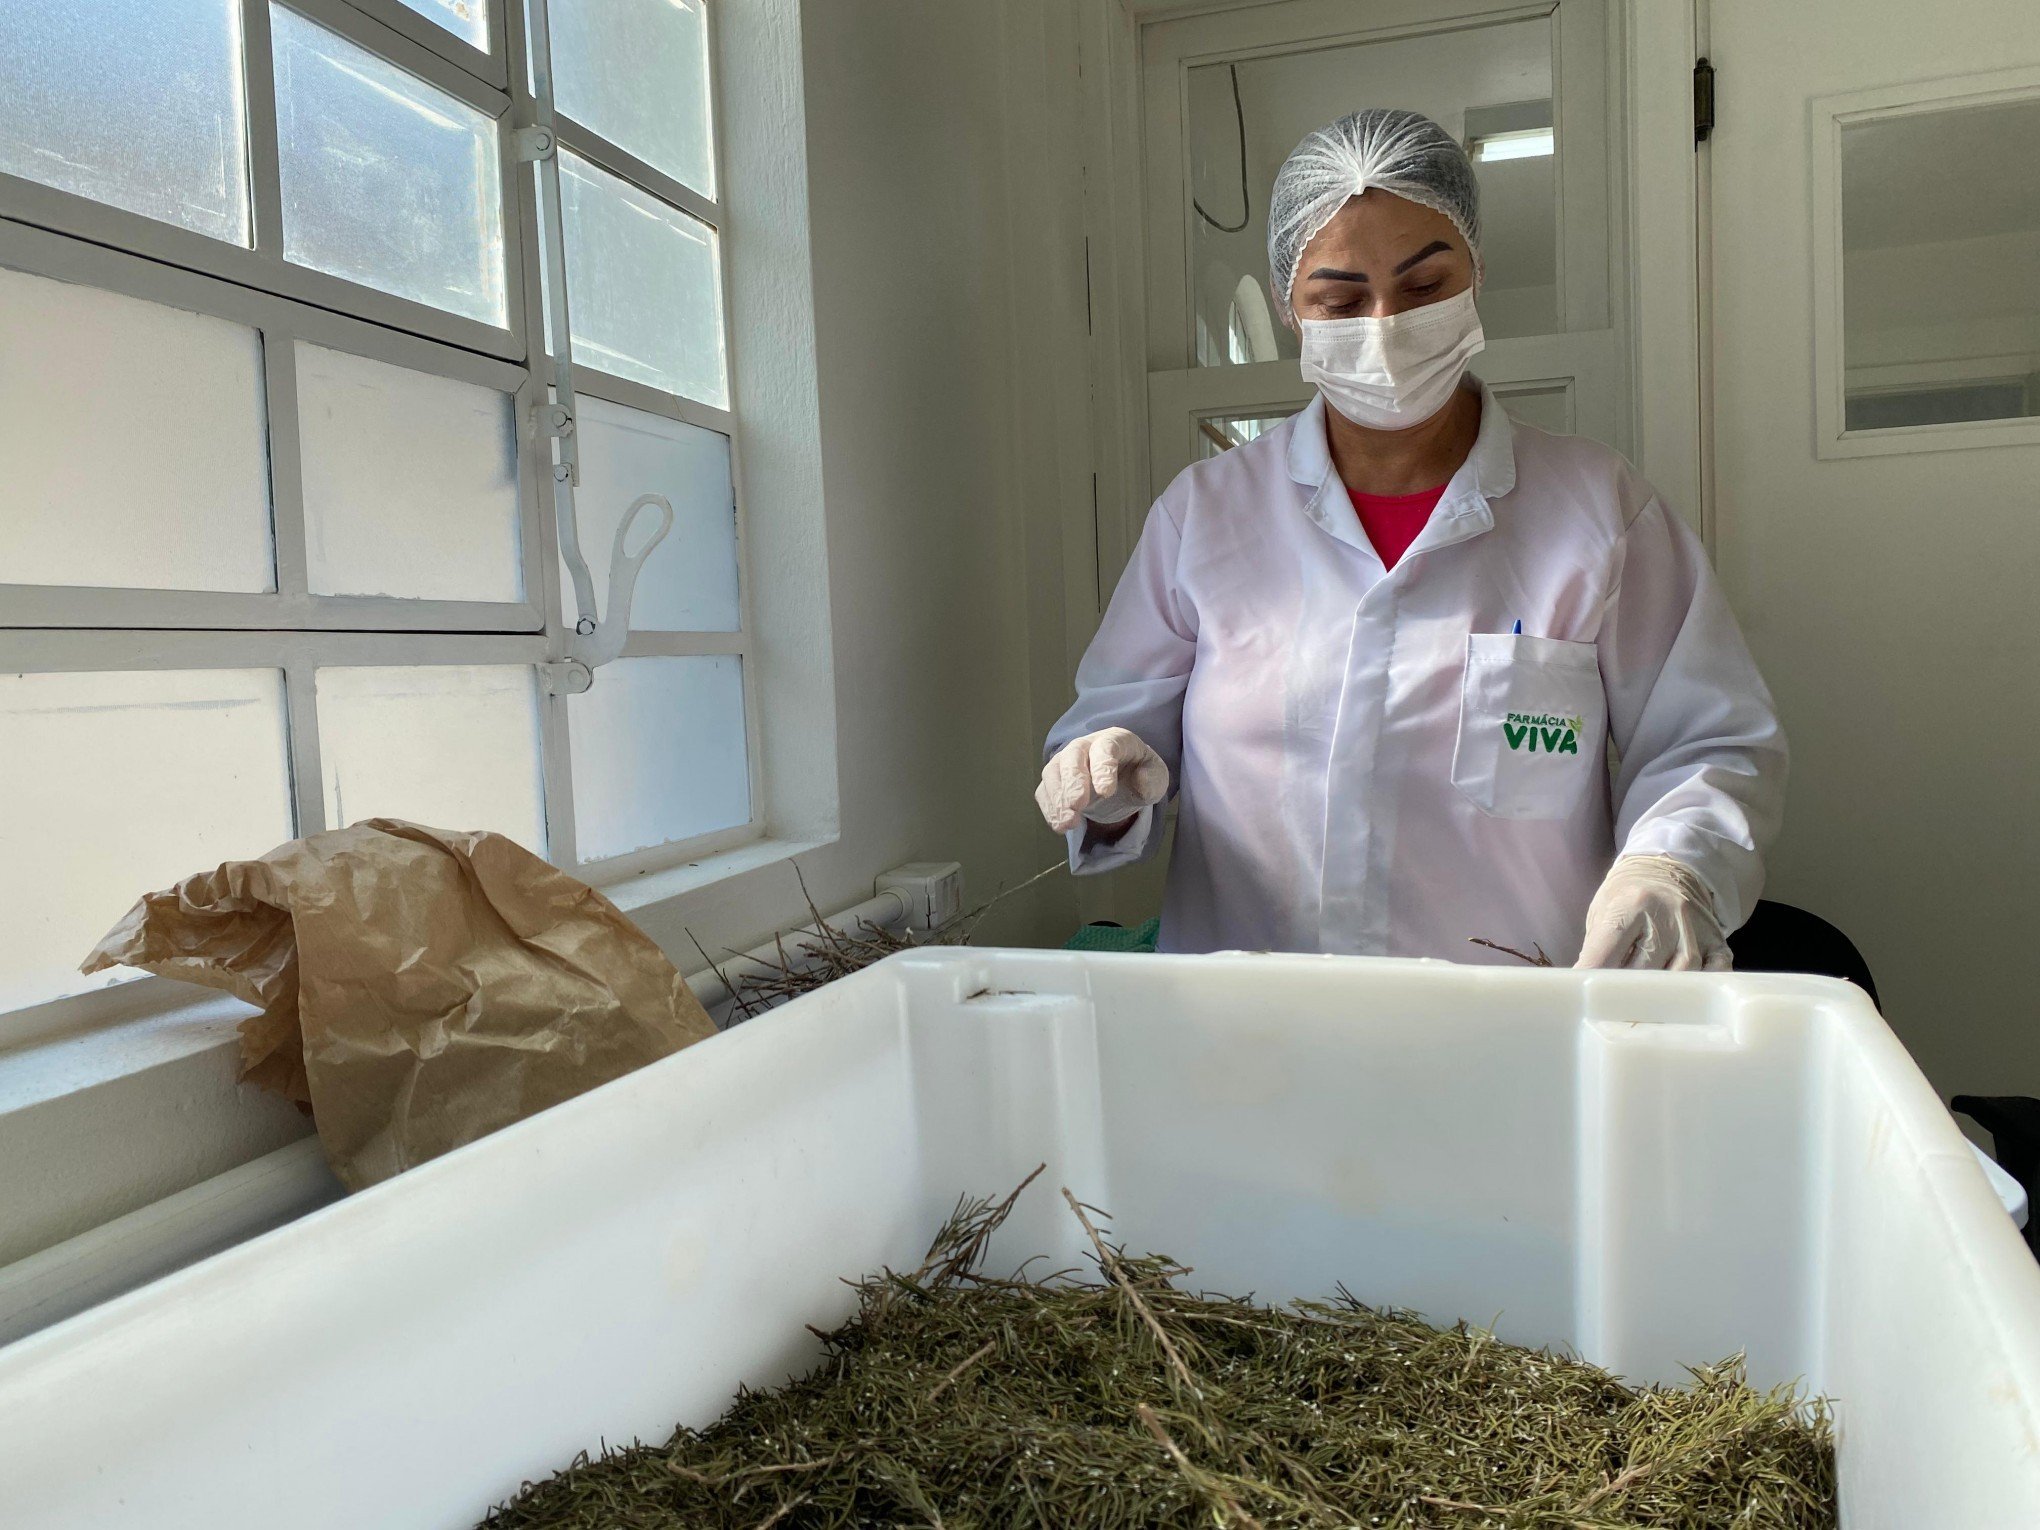 Farmácia Viva tem unidade inaugurada para beneficiar ervas medicinais; entenda o trabalho